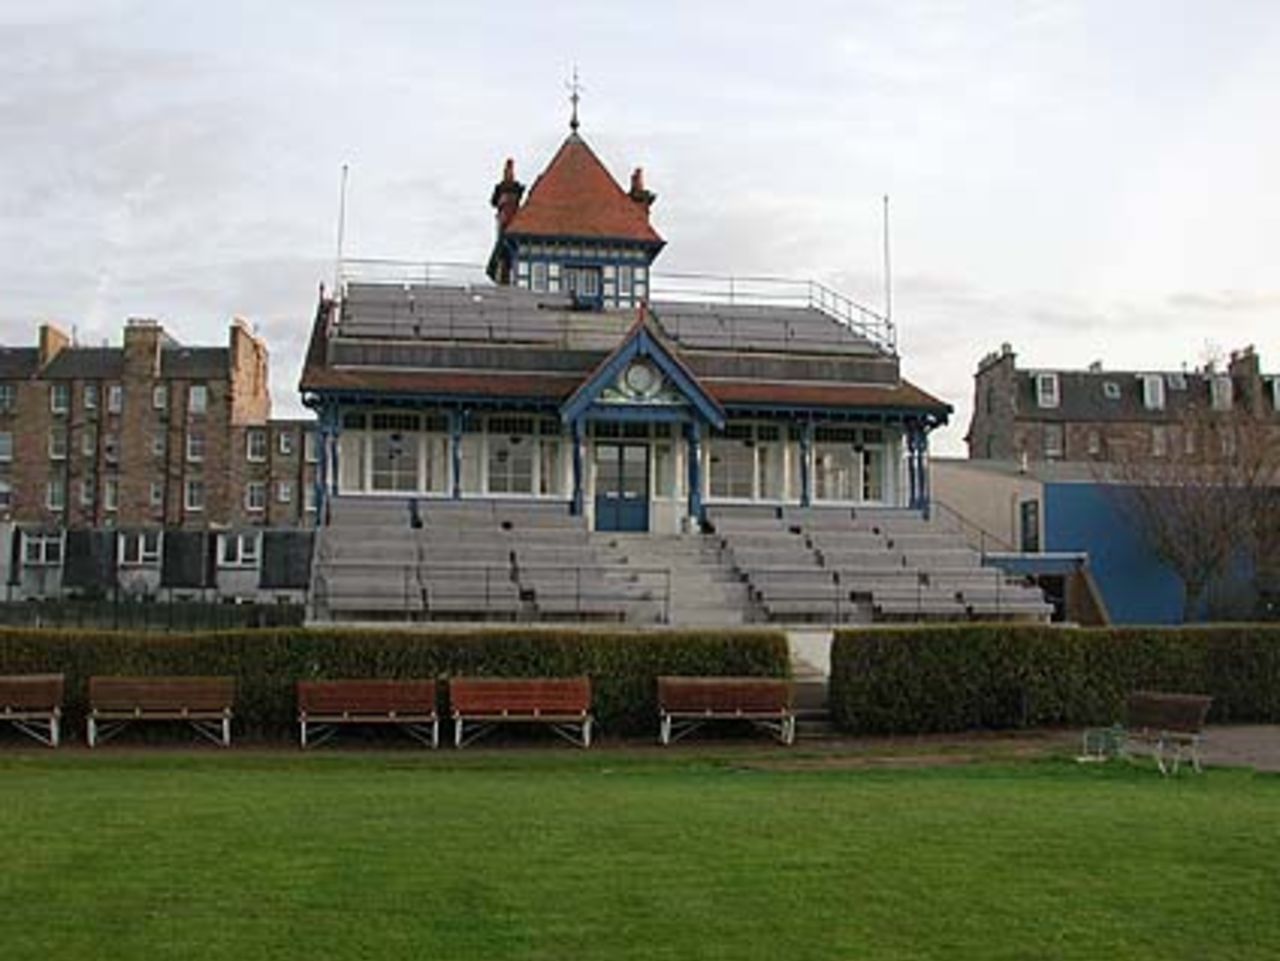 Grange Cricket Club Pavilion